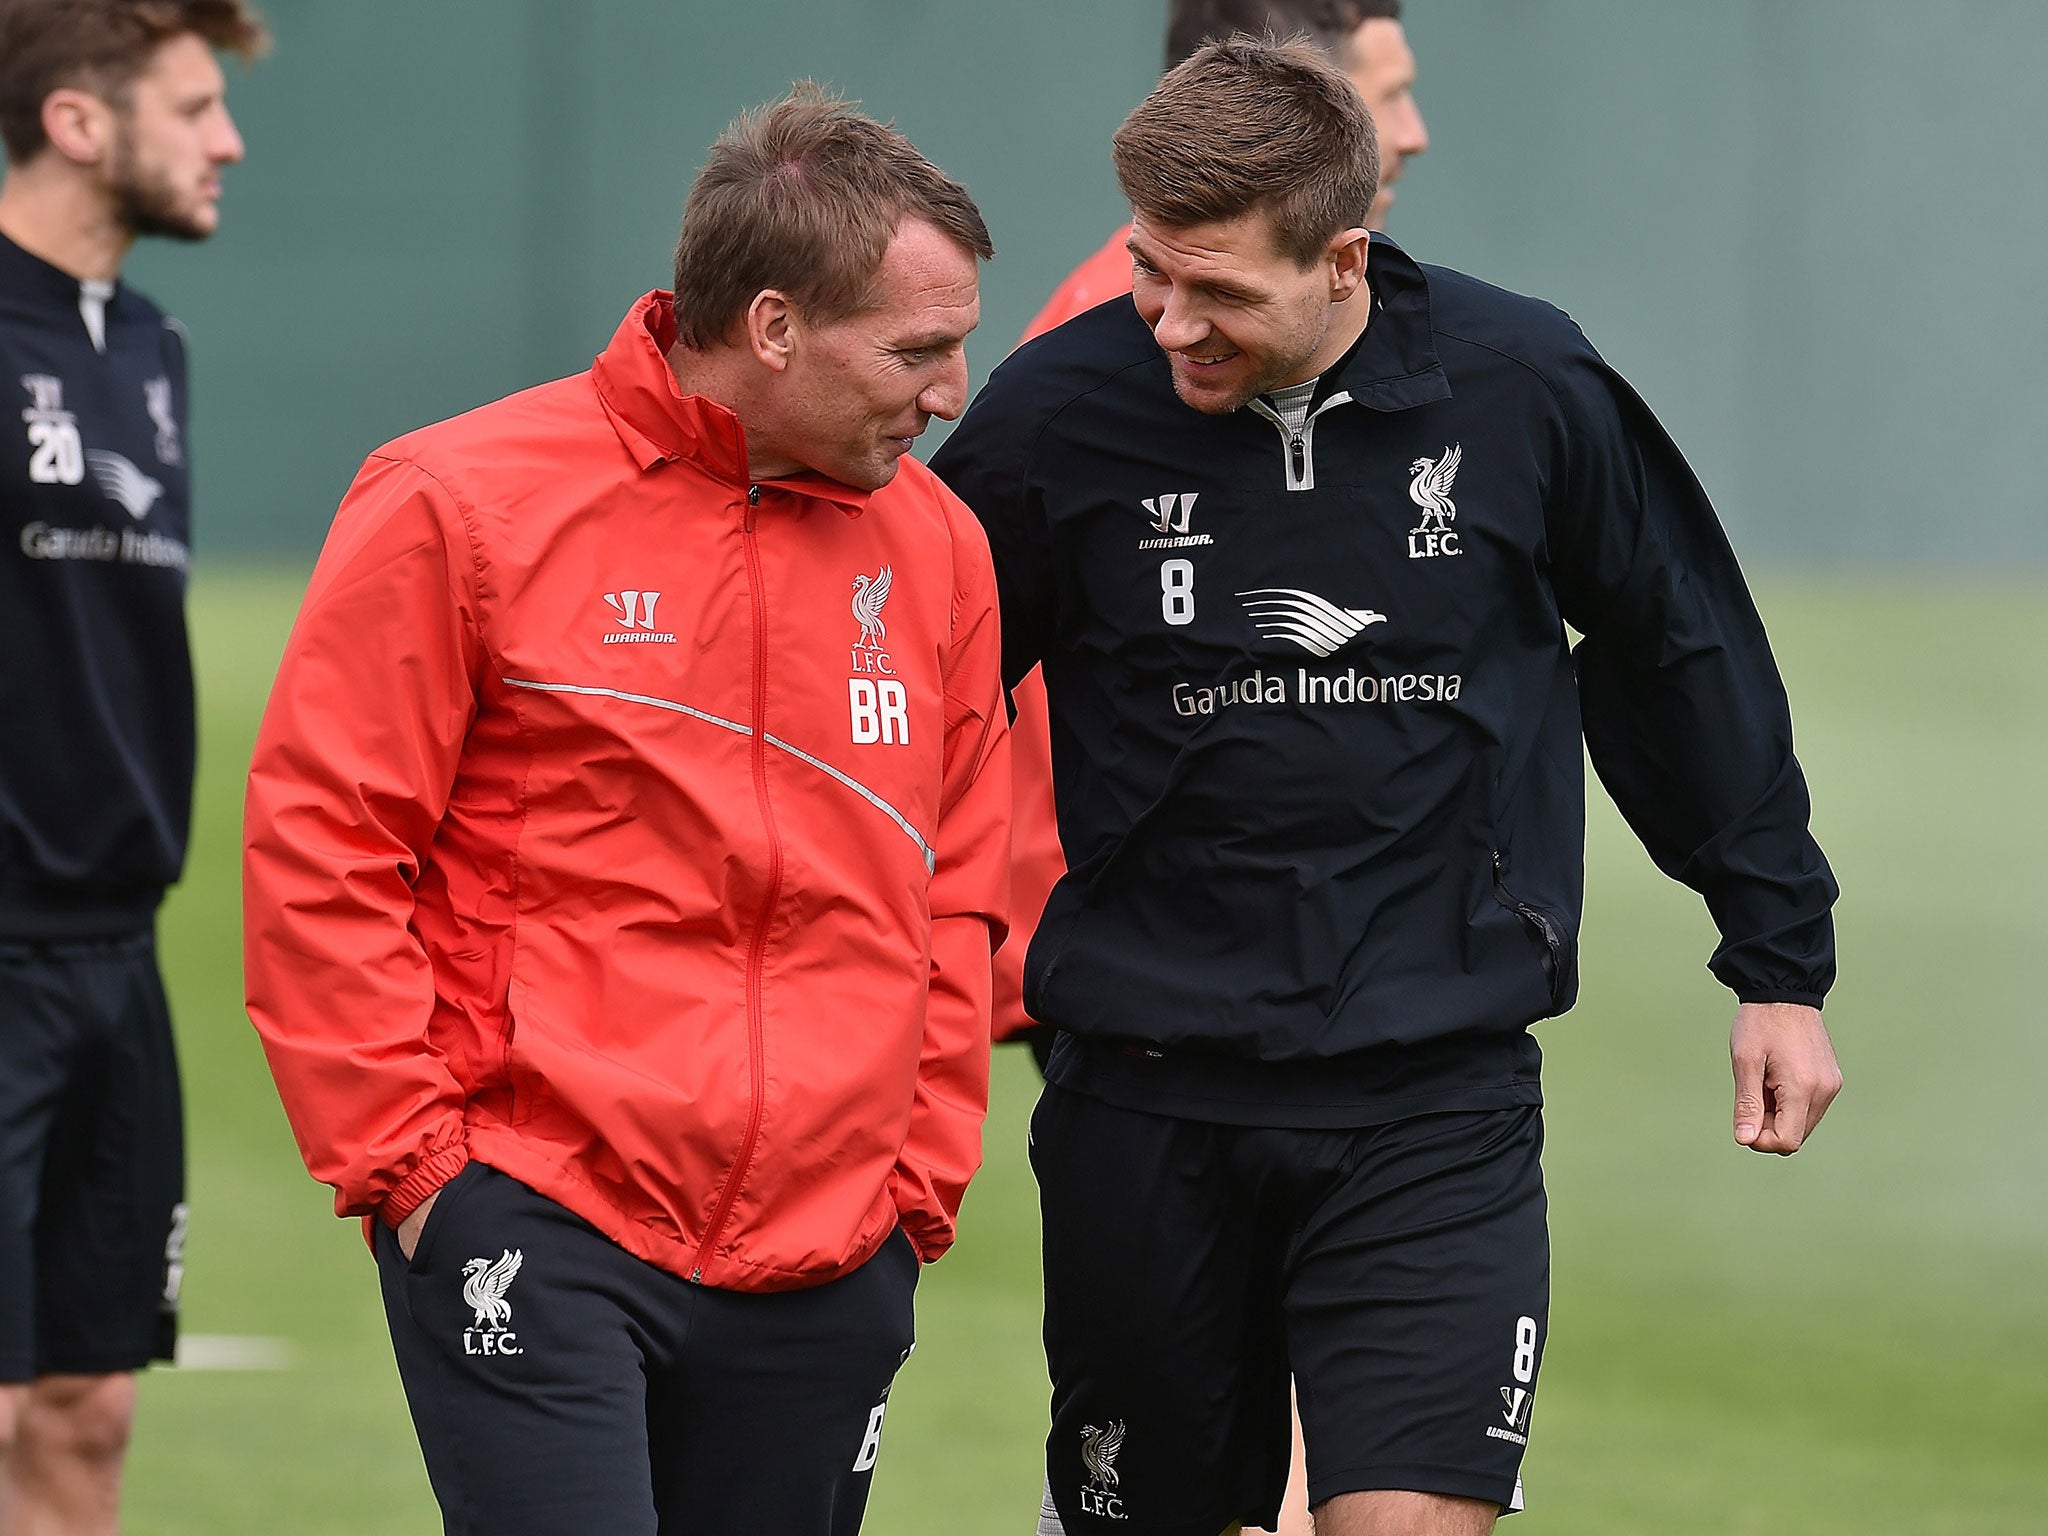 Brendan Rodgers shares a joke with Steven Gerrard